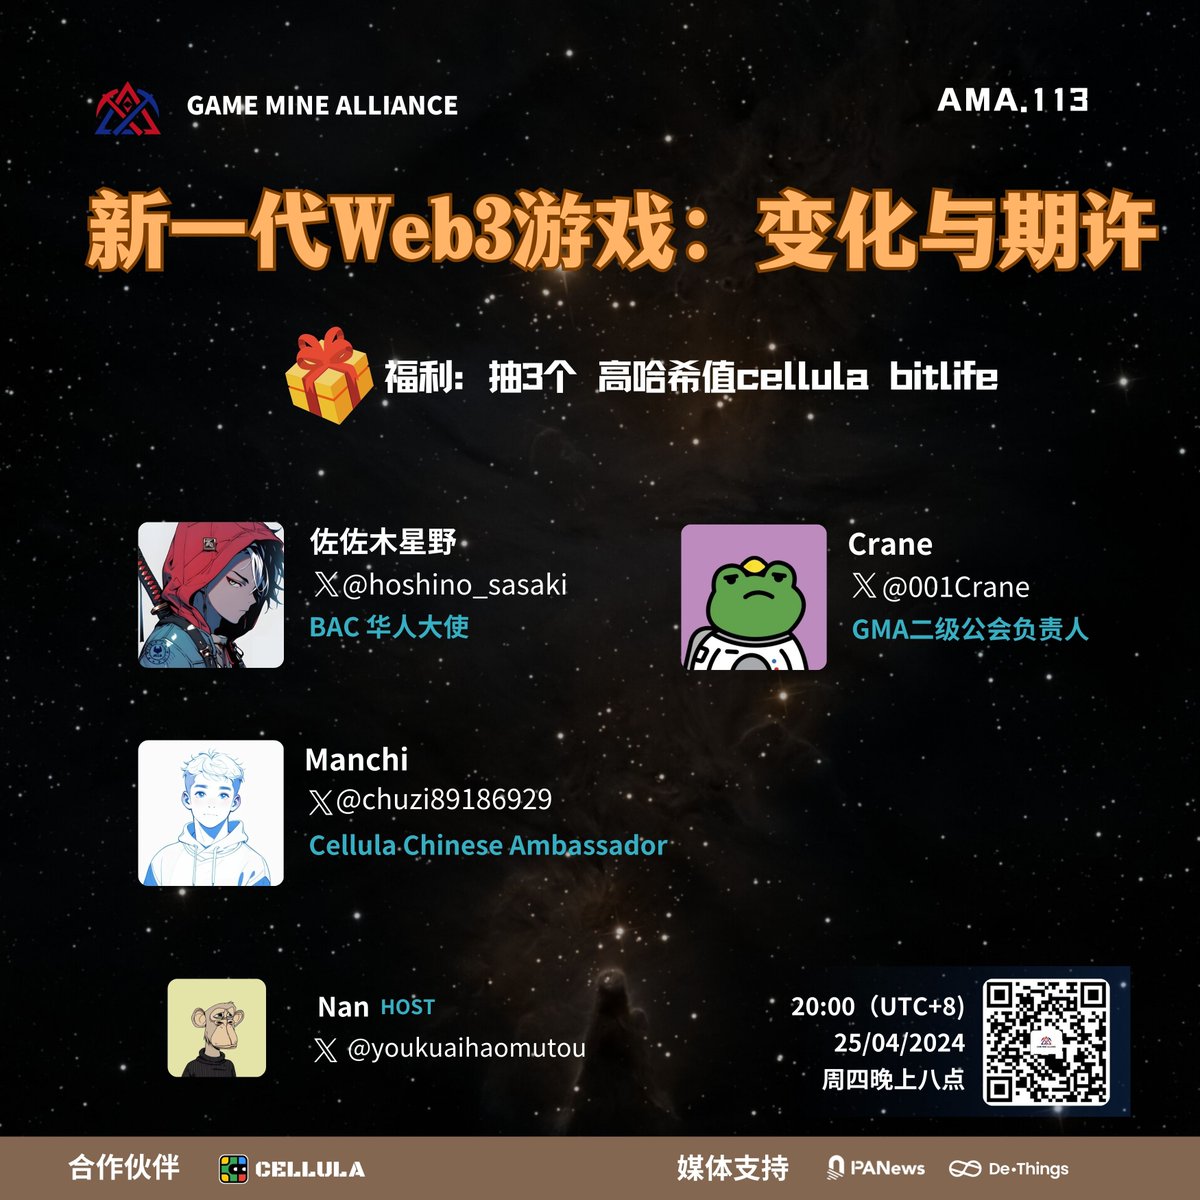 📢📢GMA 113期 AMA： 《新一代Web3游戏：变化与期许》 ⏰20:00（UTC+8）2024年4月25日（周四） 🔗Space：twitter.com/i/spaces/1mnxe… 🎁 3个高哈希值 Cellula BitLife 🎙️嘉宾 佐佐木星野：BAC 华人大使 推特 @hoshino_sasaki Crane：GMA二级公会负责人 推特 @001Crane Manchi： Cellula Chinese…